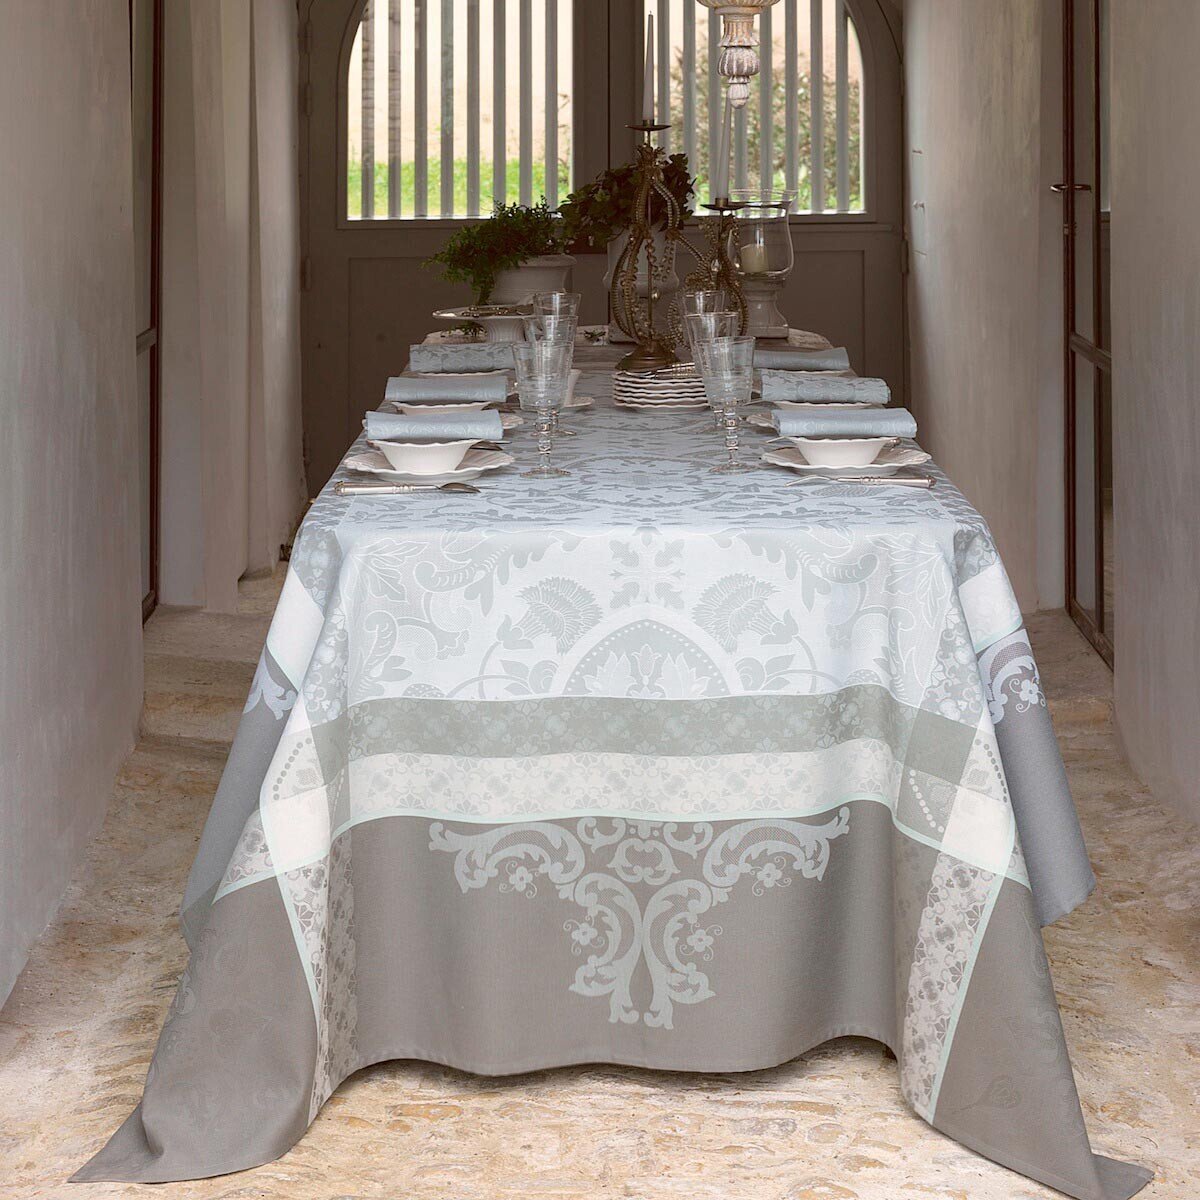 Le Jacquard Francais Azulejos Grey Tablecloth 69 x 126 Inch